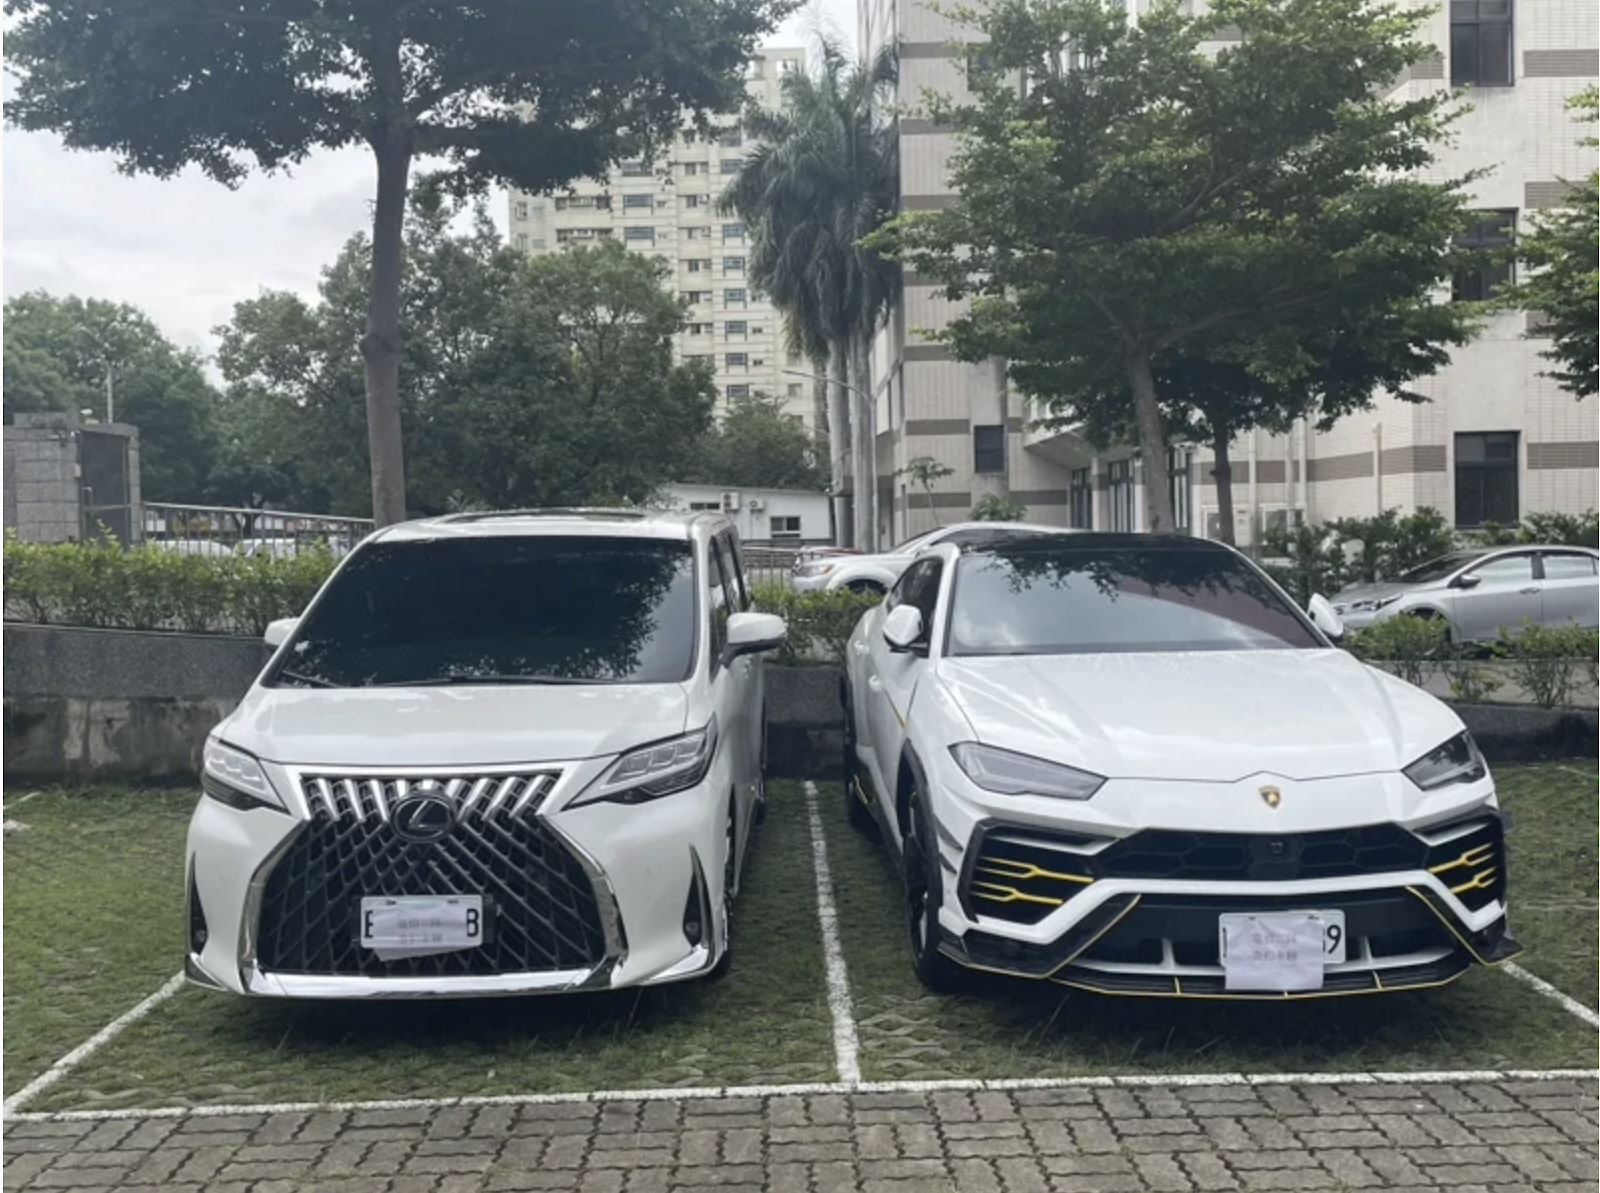 Taiwan authorities seized a Lexus LM and Lamborghini Urus